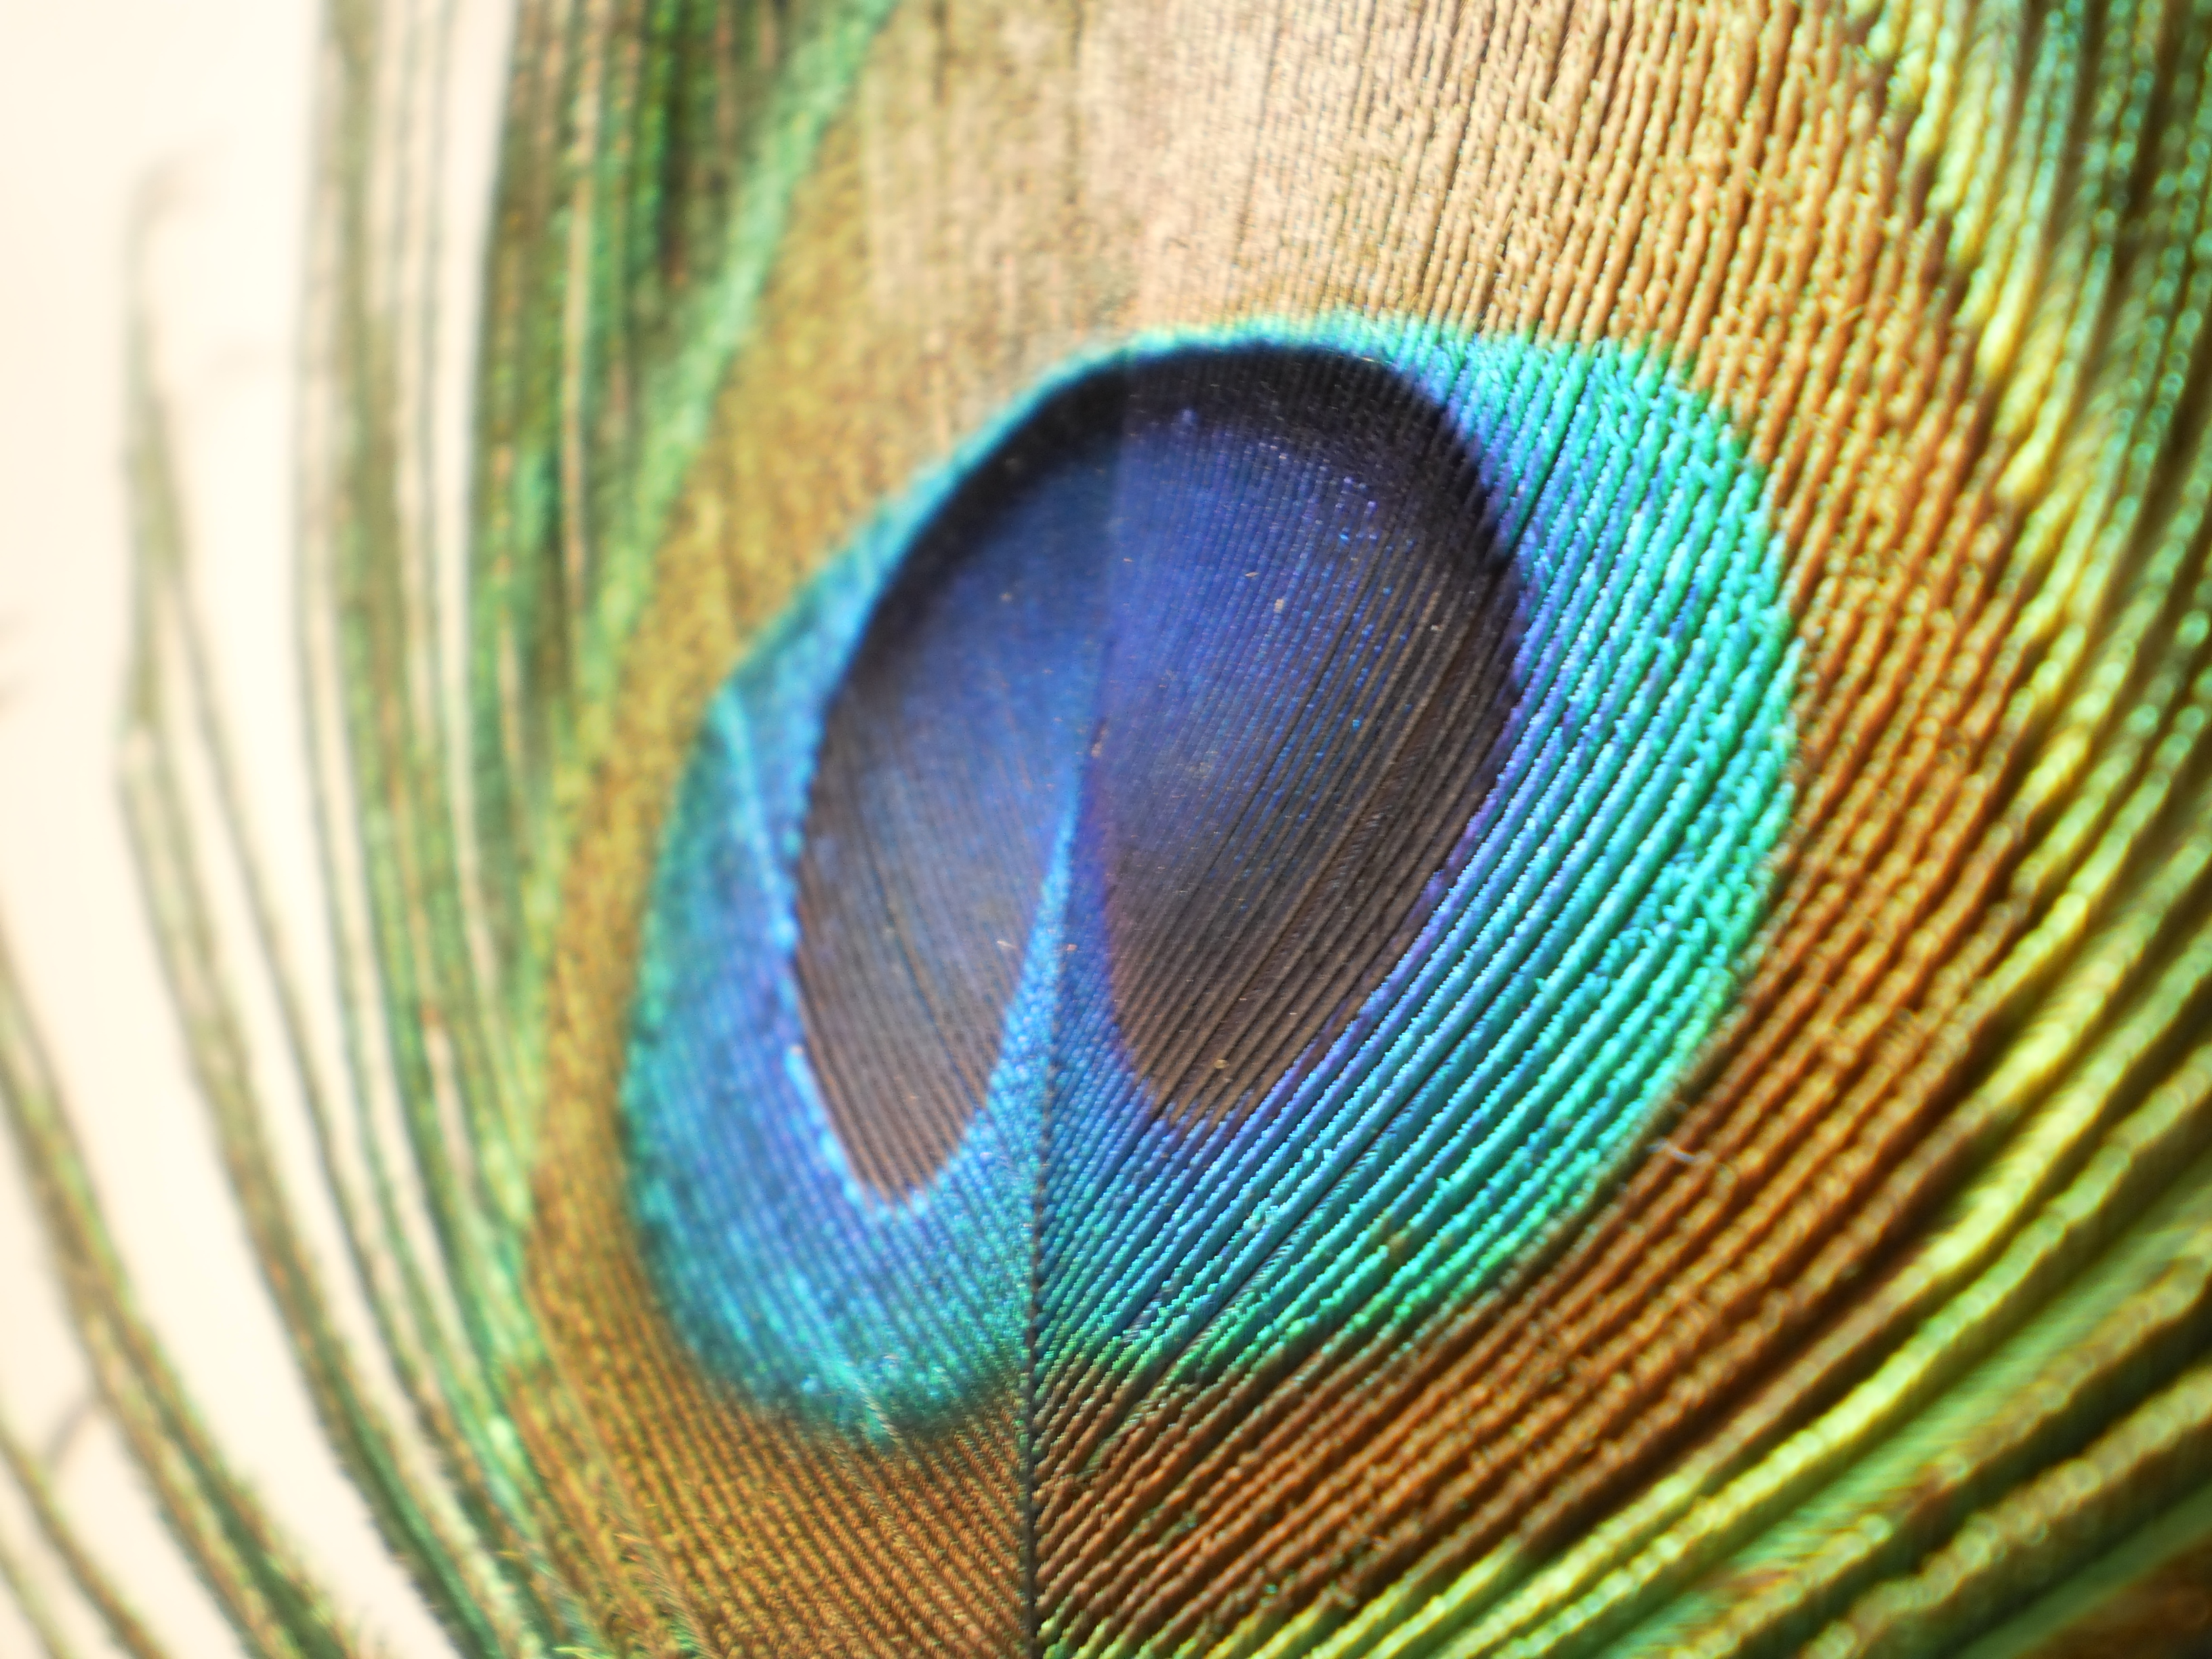 File:Peafowl-closeup-feather.jpg - Wikimedia Commons